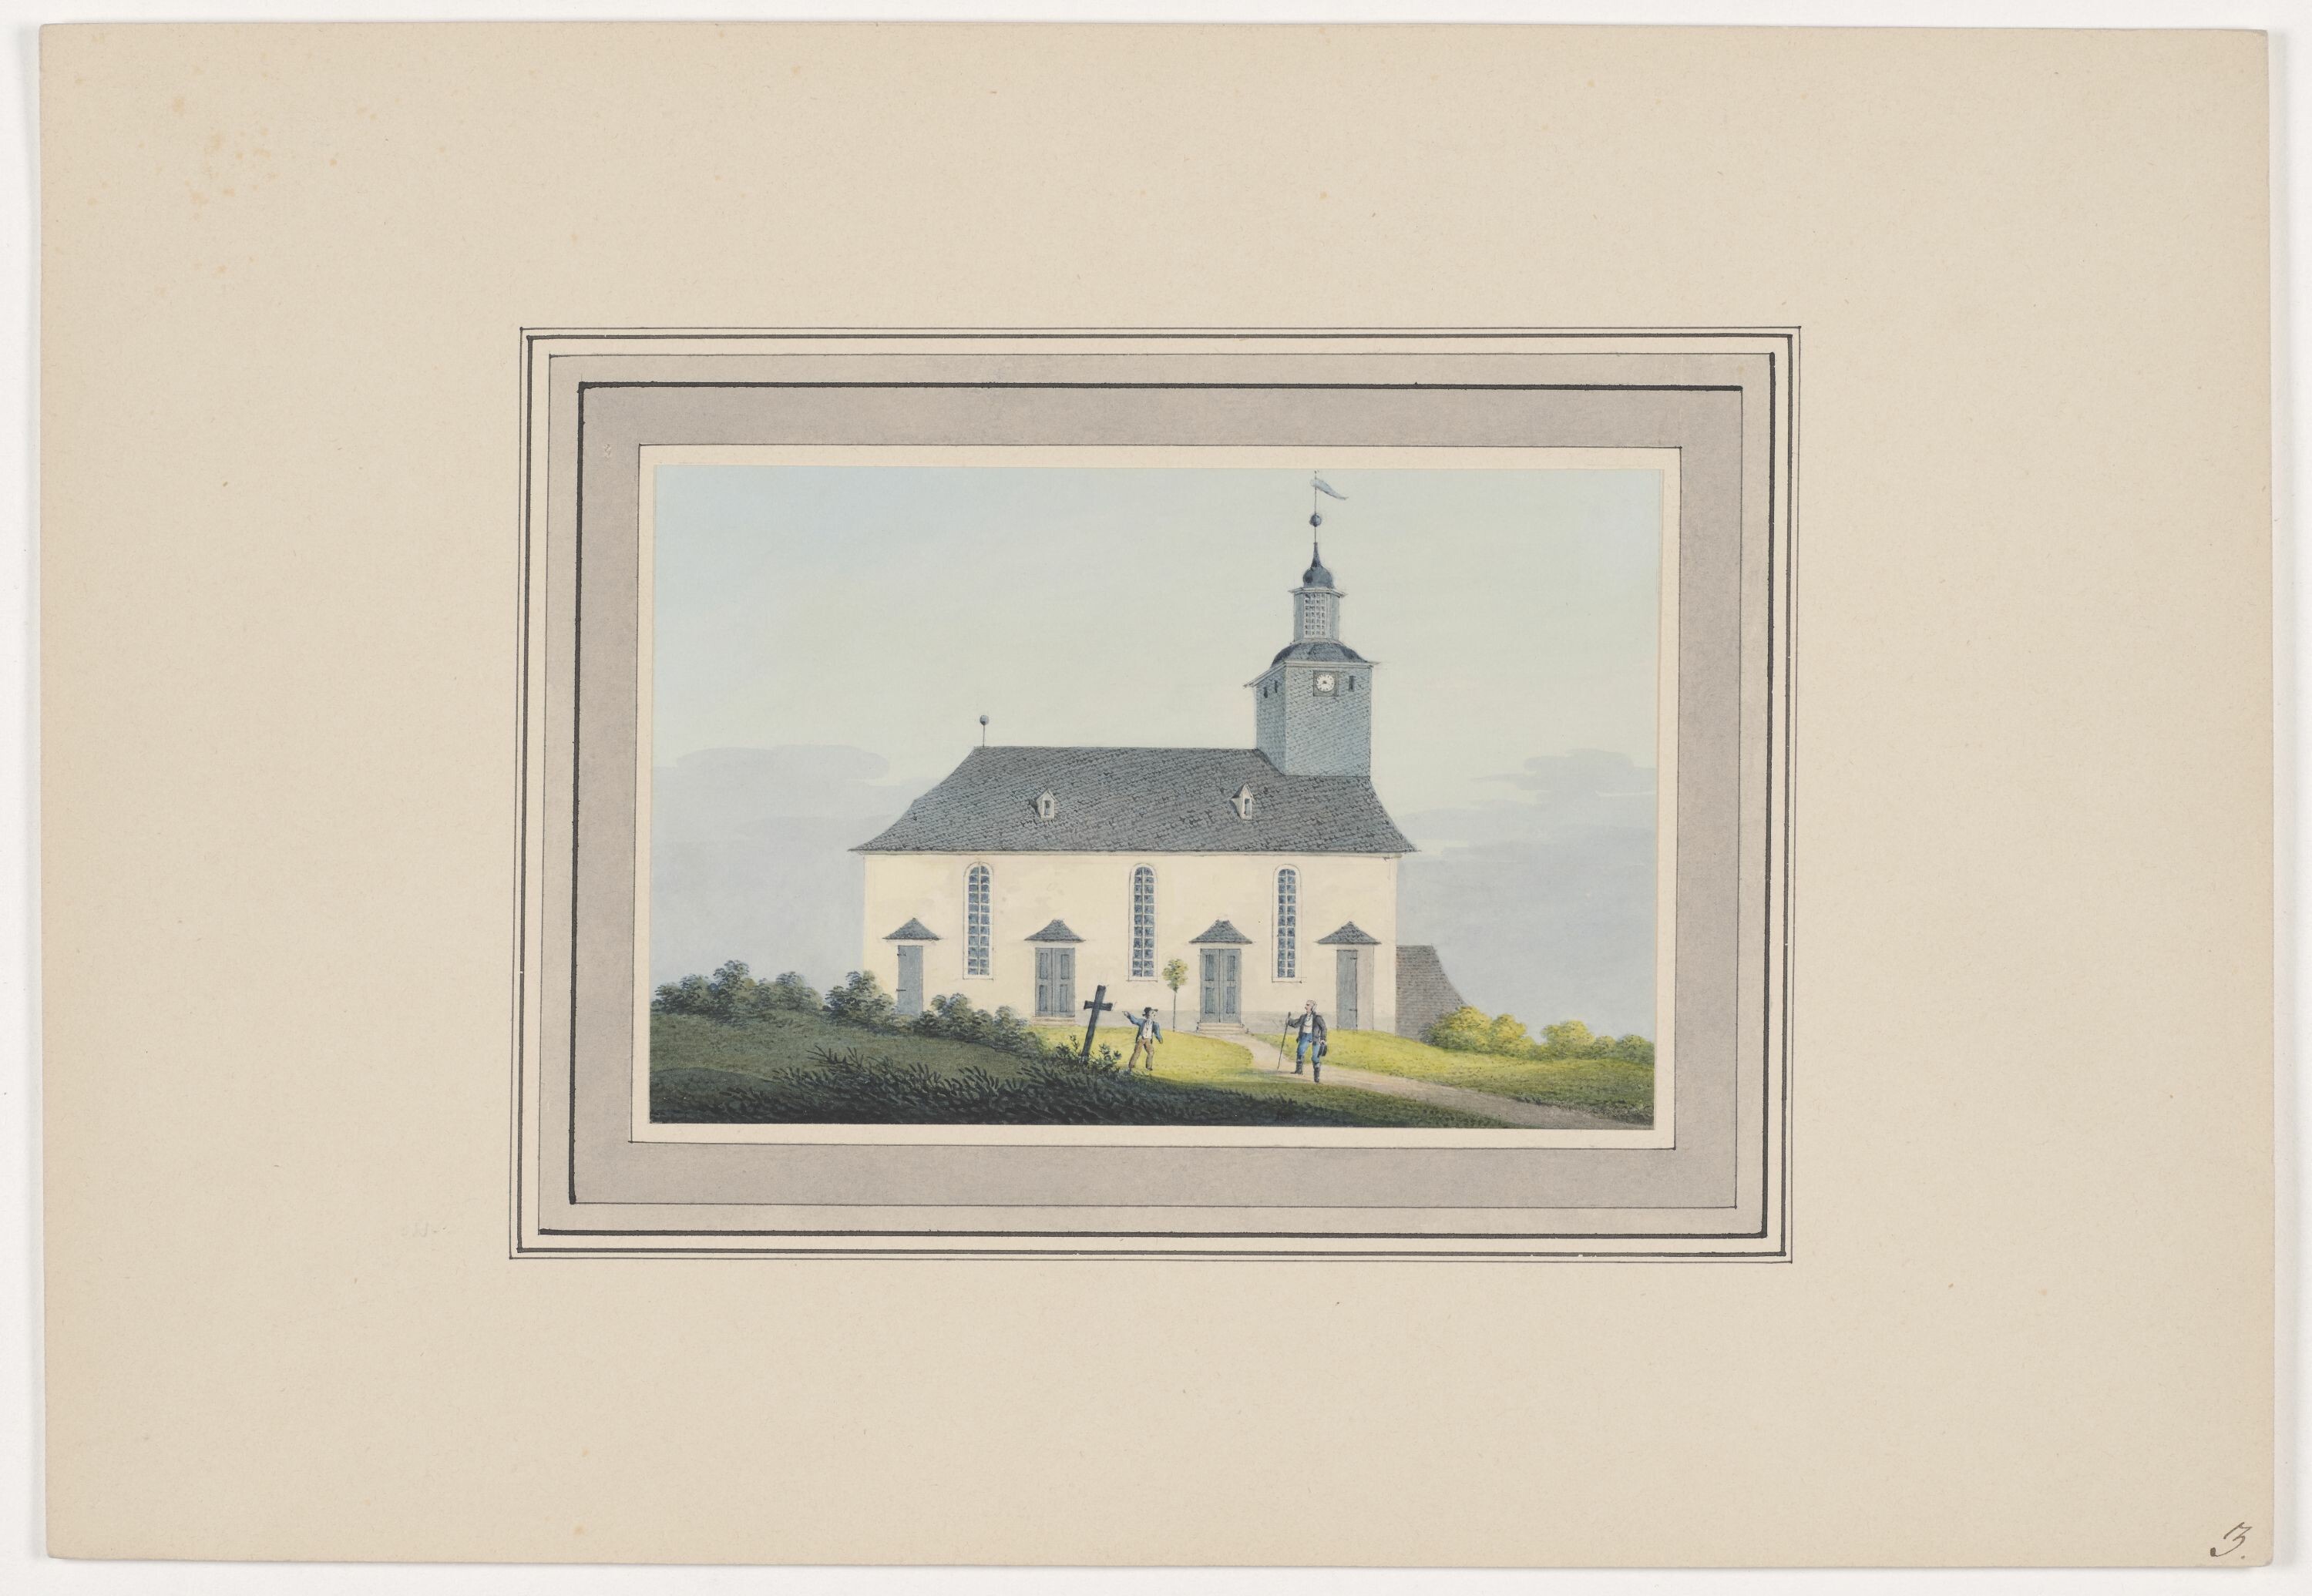 Kirche zu Ebersbrunn, aus Mappe: Dorfkirchen der Ephorie Zwickau, Blatt 3 (KUNSTSAMMLUNGEN ZWICKAU Max-Pechstein-Museum RR-F)